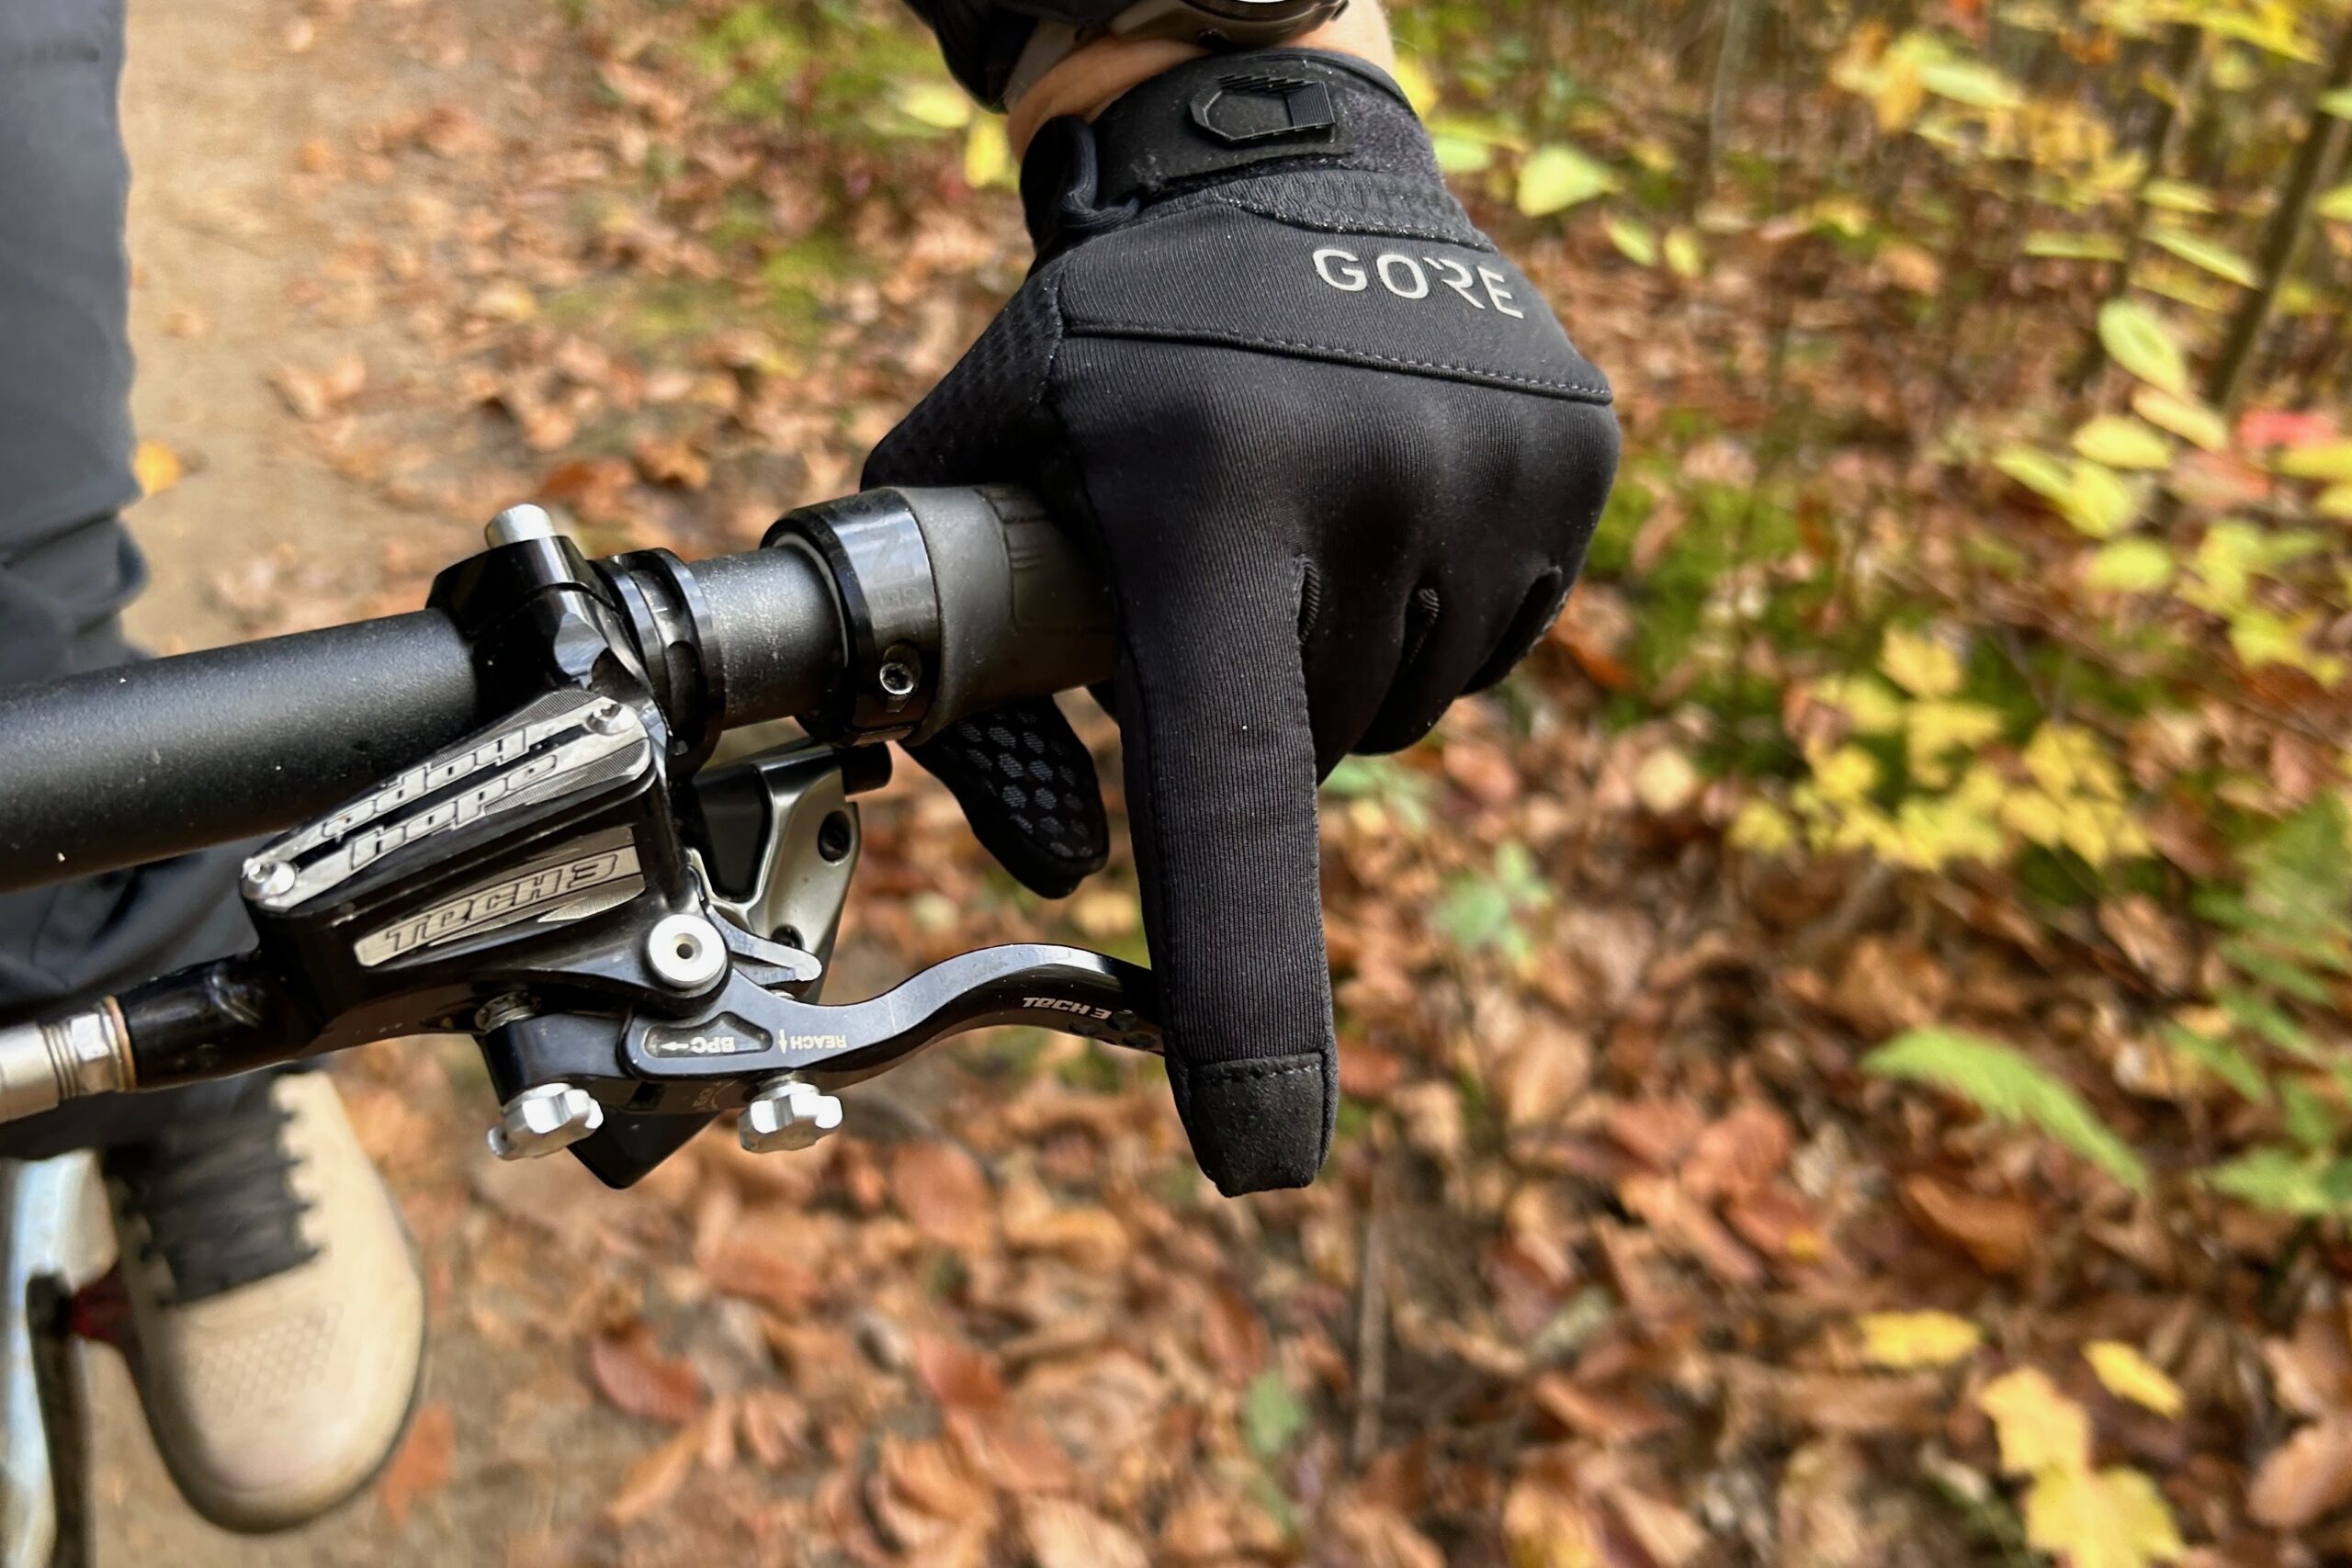 Wearing the Gorewear C5 Gore-Tex Infinium mountain bike gloves